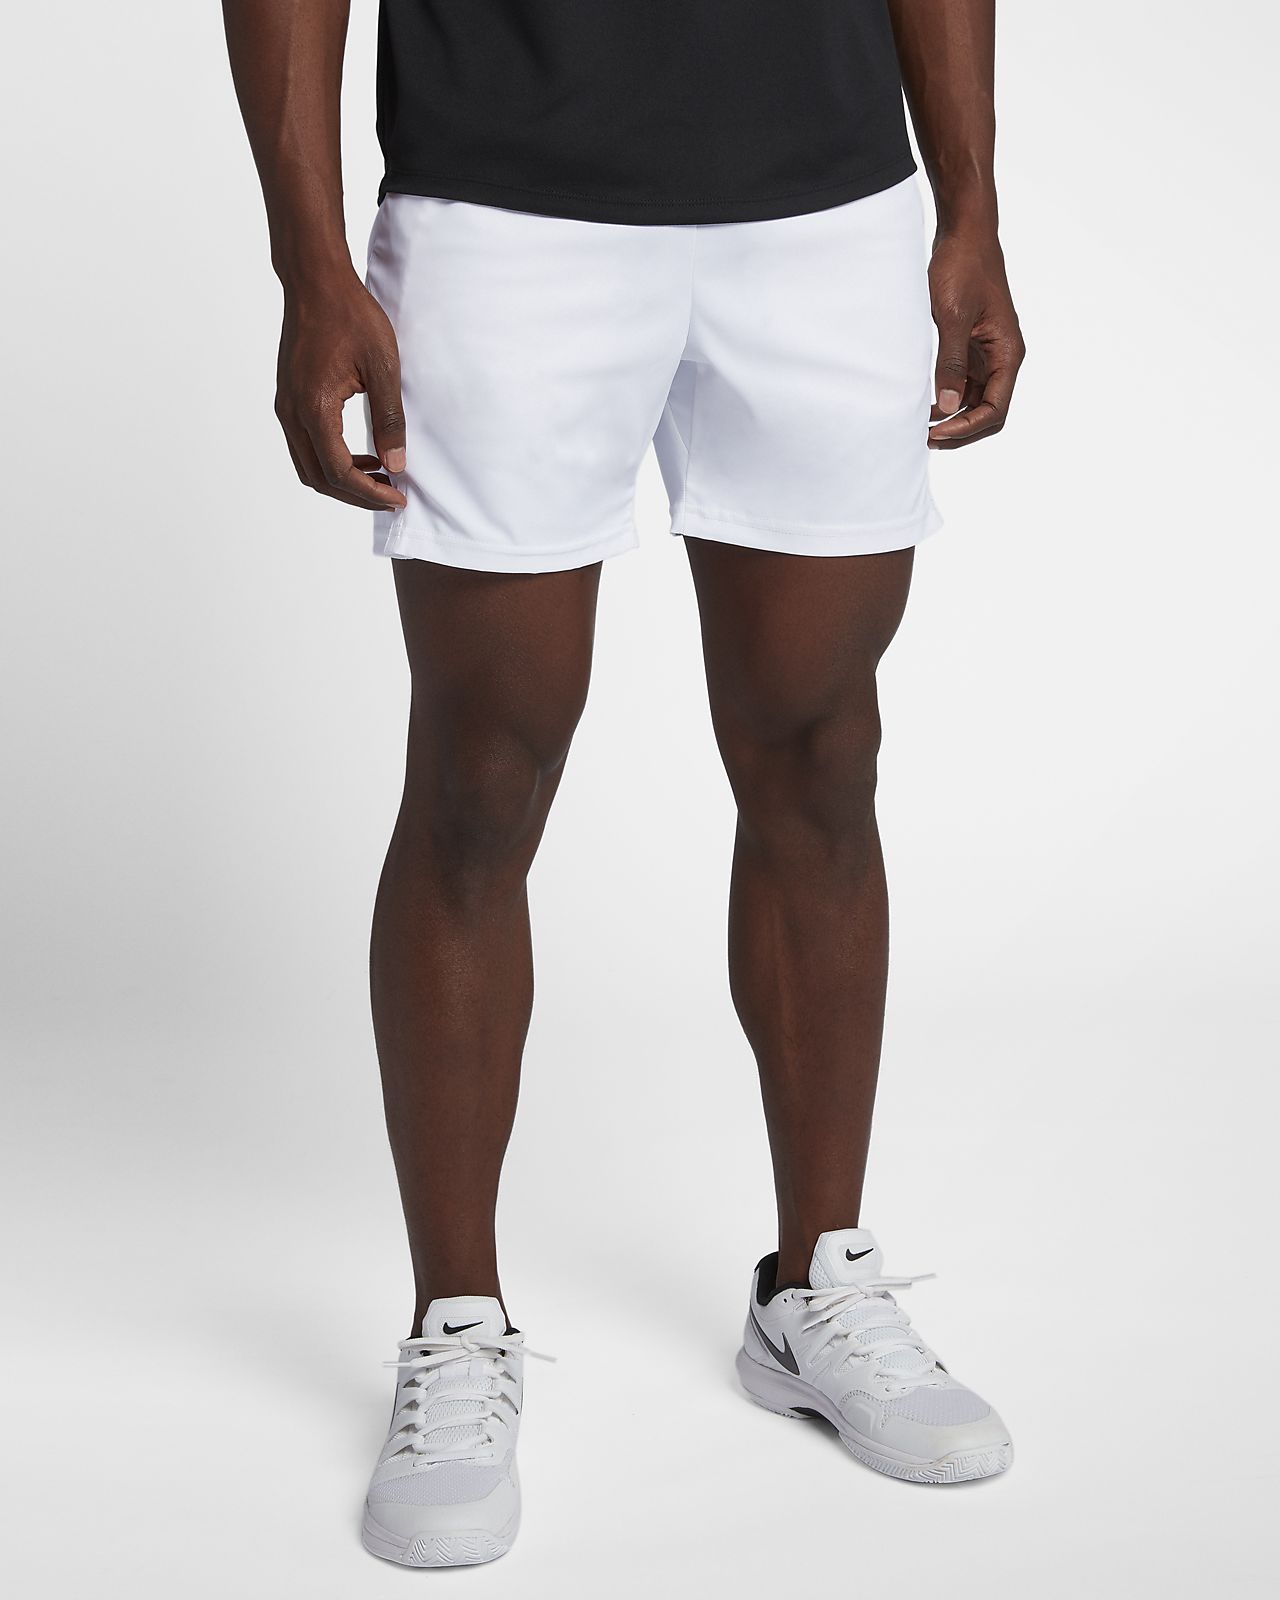 nike tennis shorts